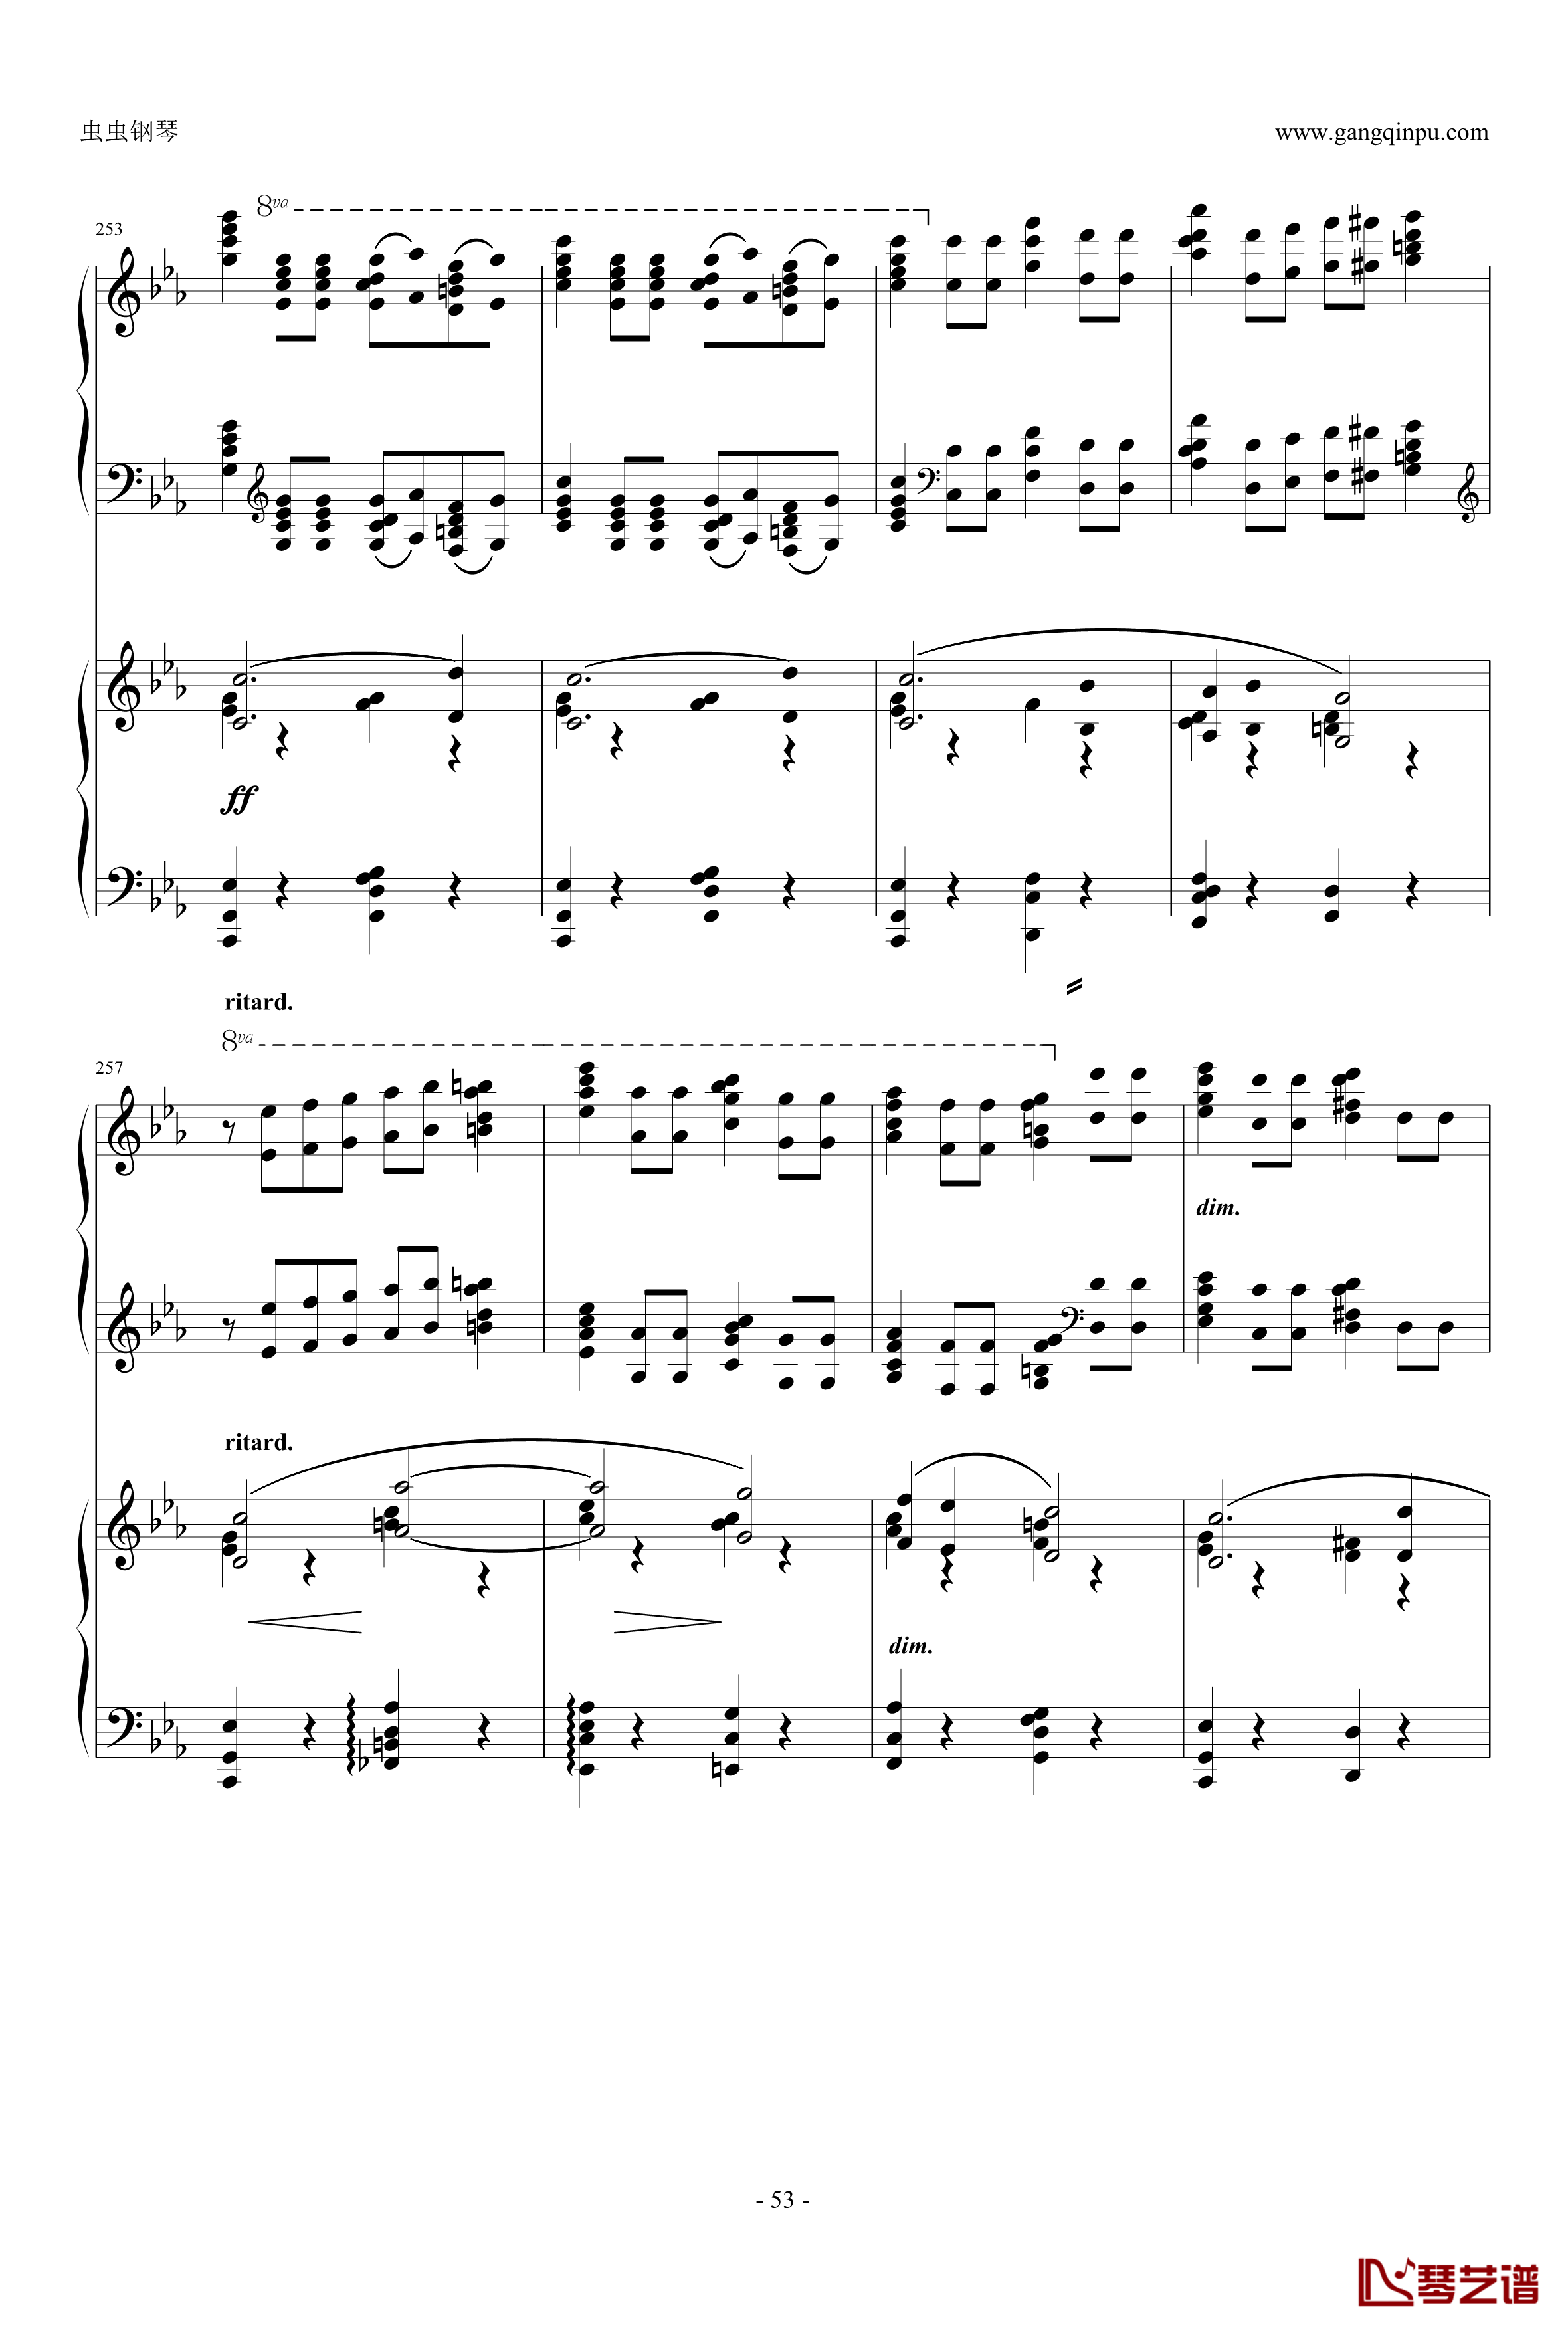 c小调第2钢琴协奏曲钢琴谱-拉赫马尼若夫53